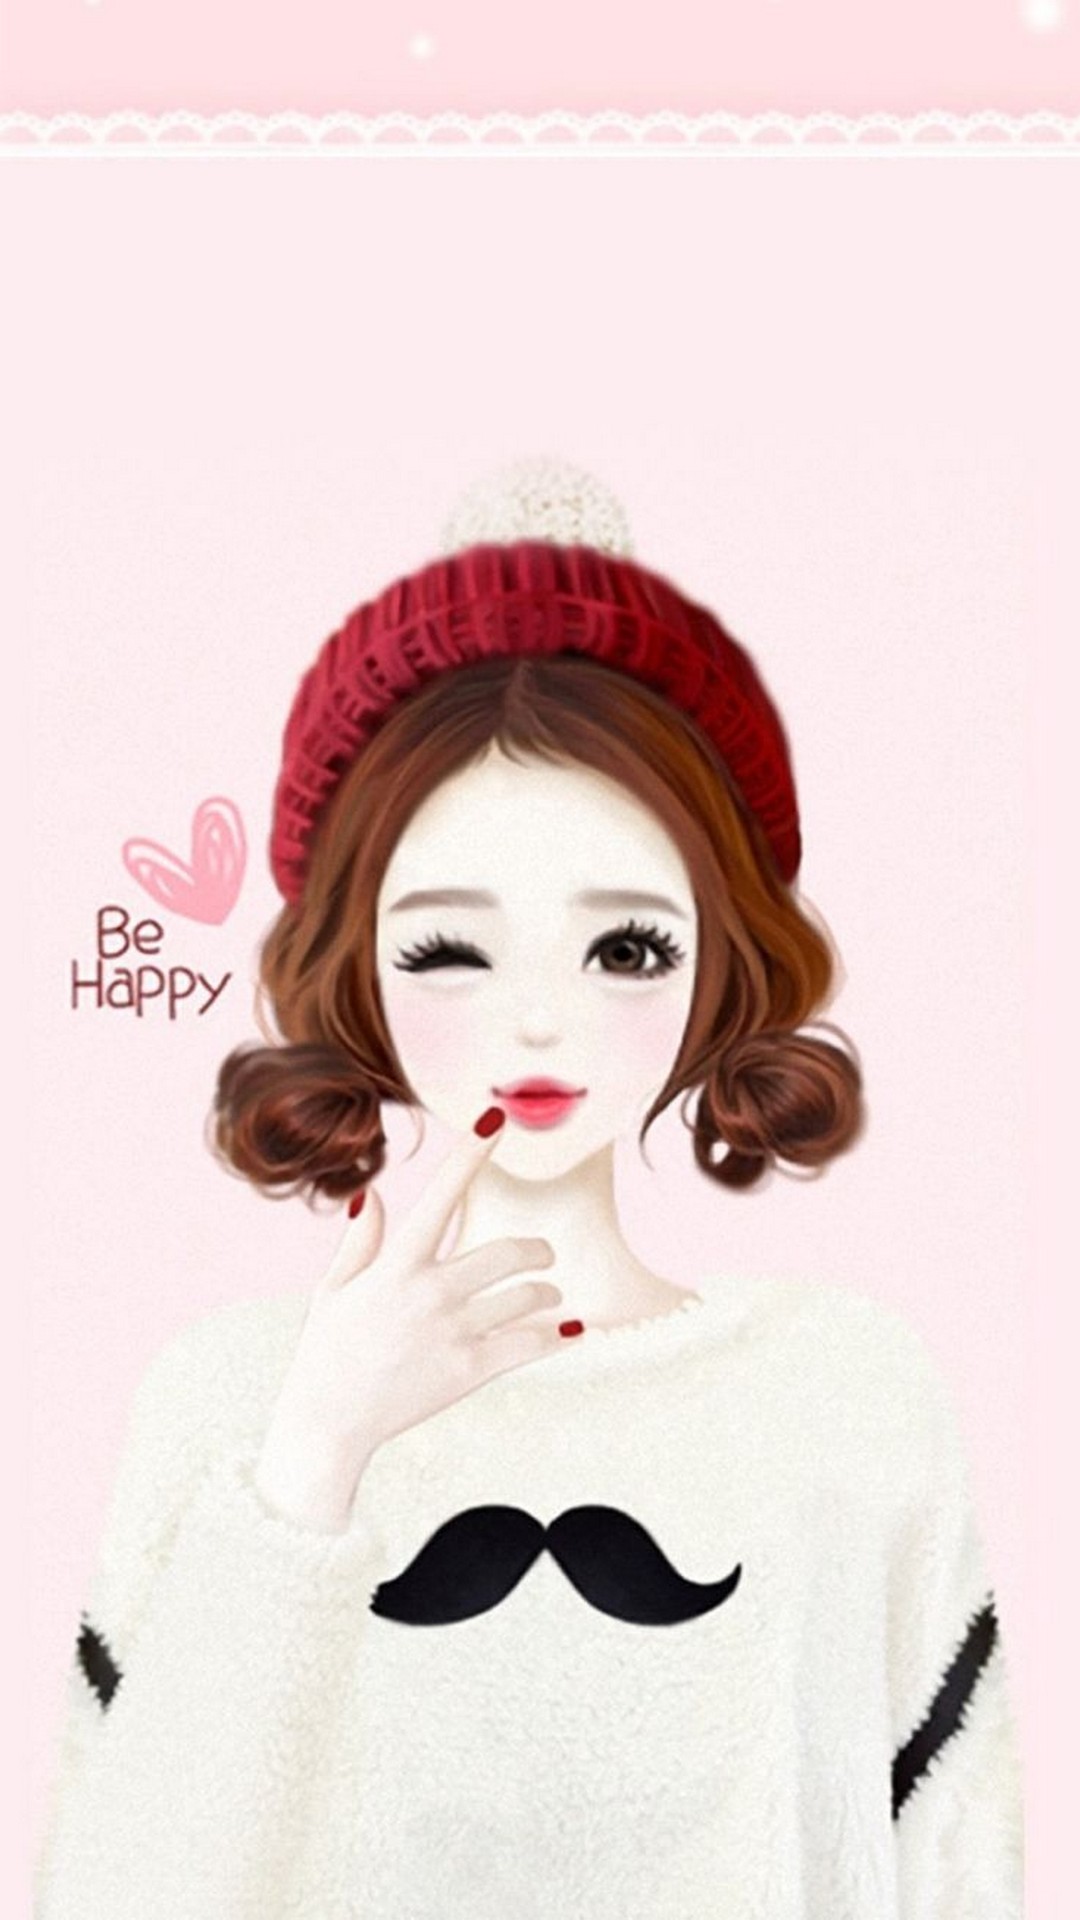 cute girl wallpaper hd for android,hair,white,clothing,beanie,lip